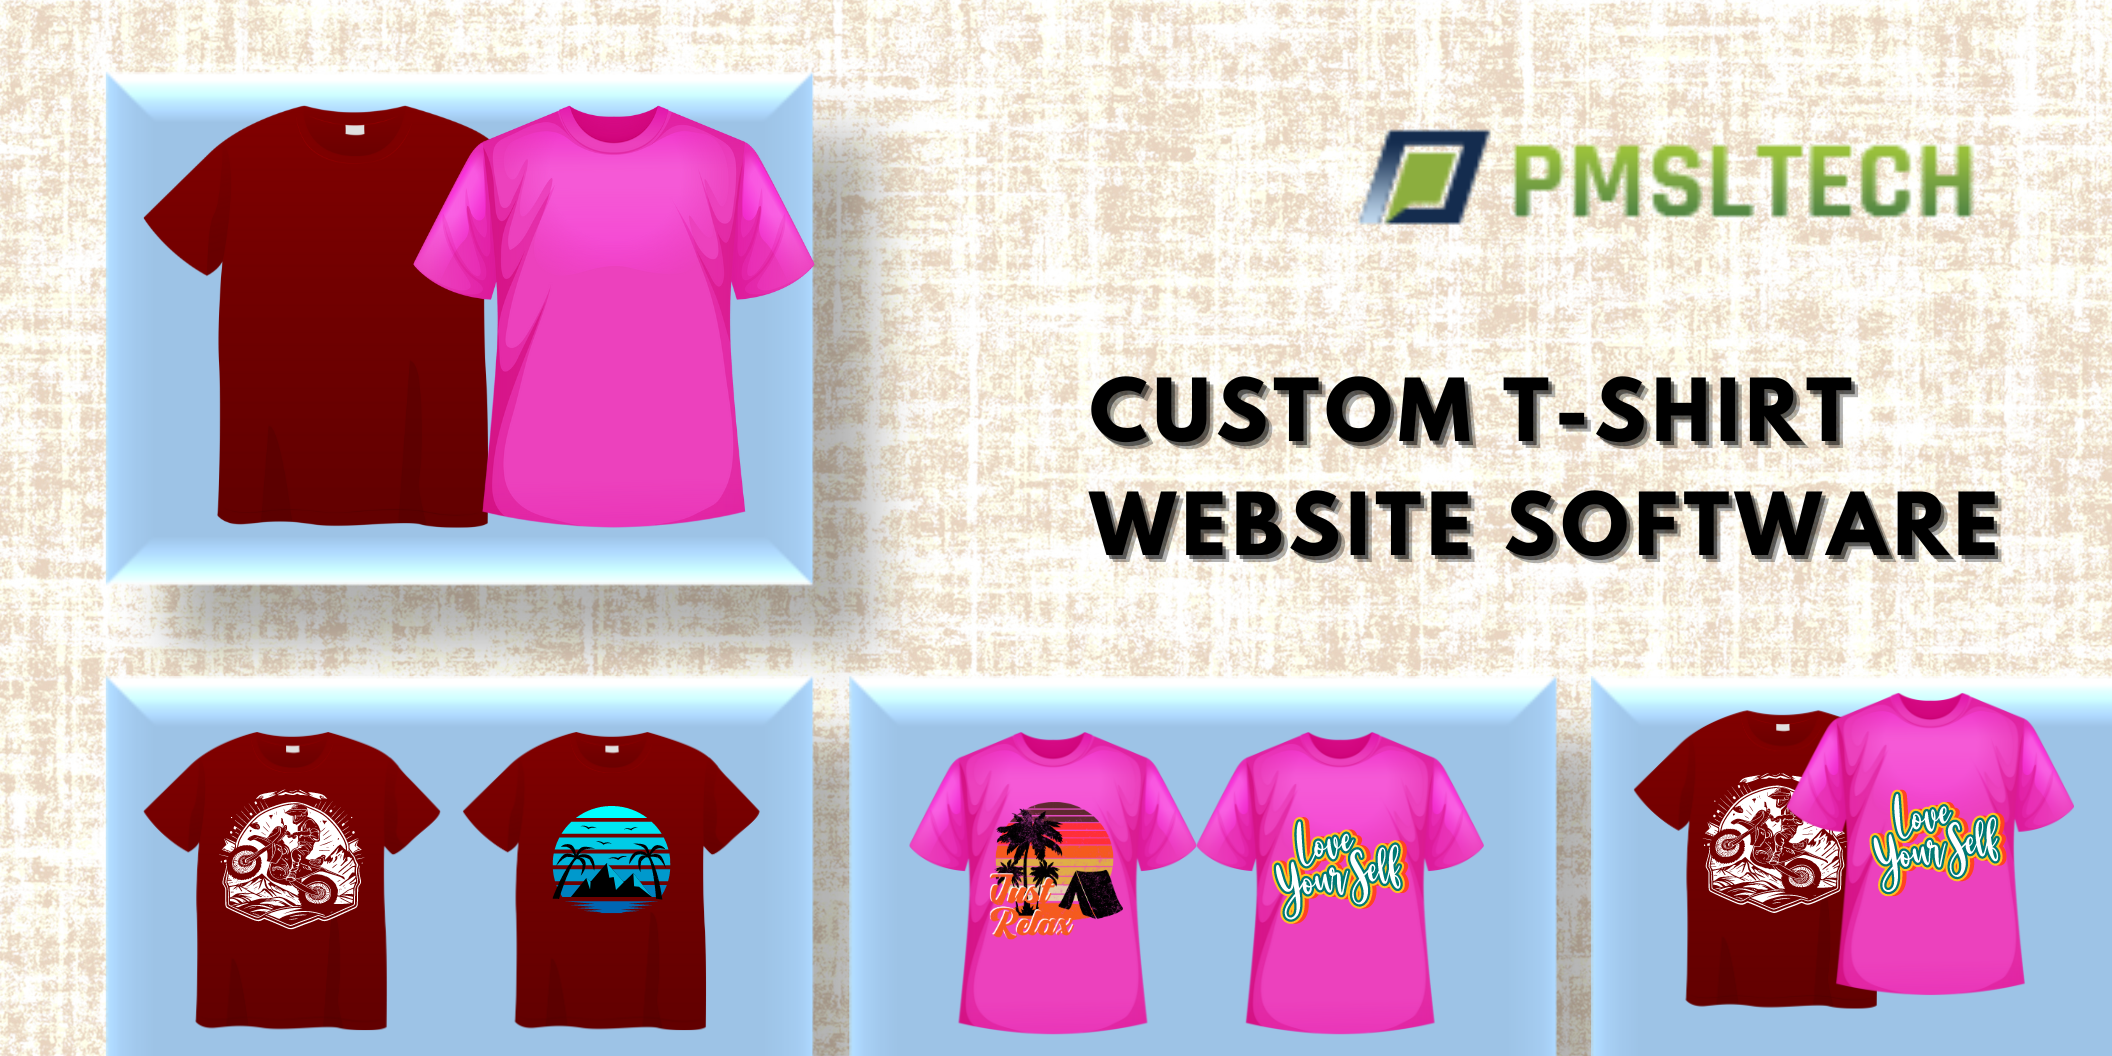 Pmsltech t shirt design website software Review & Product detail.